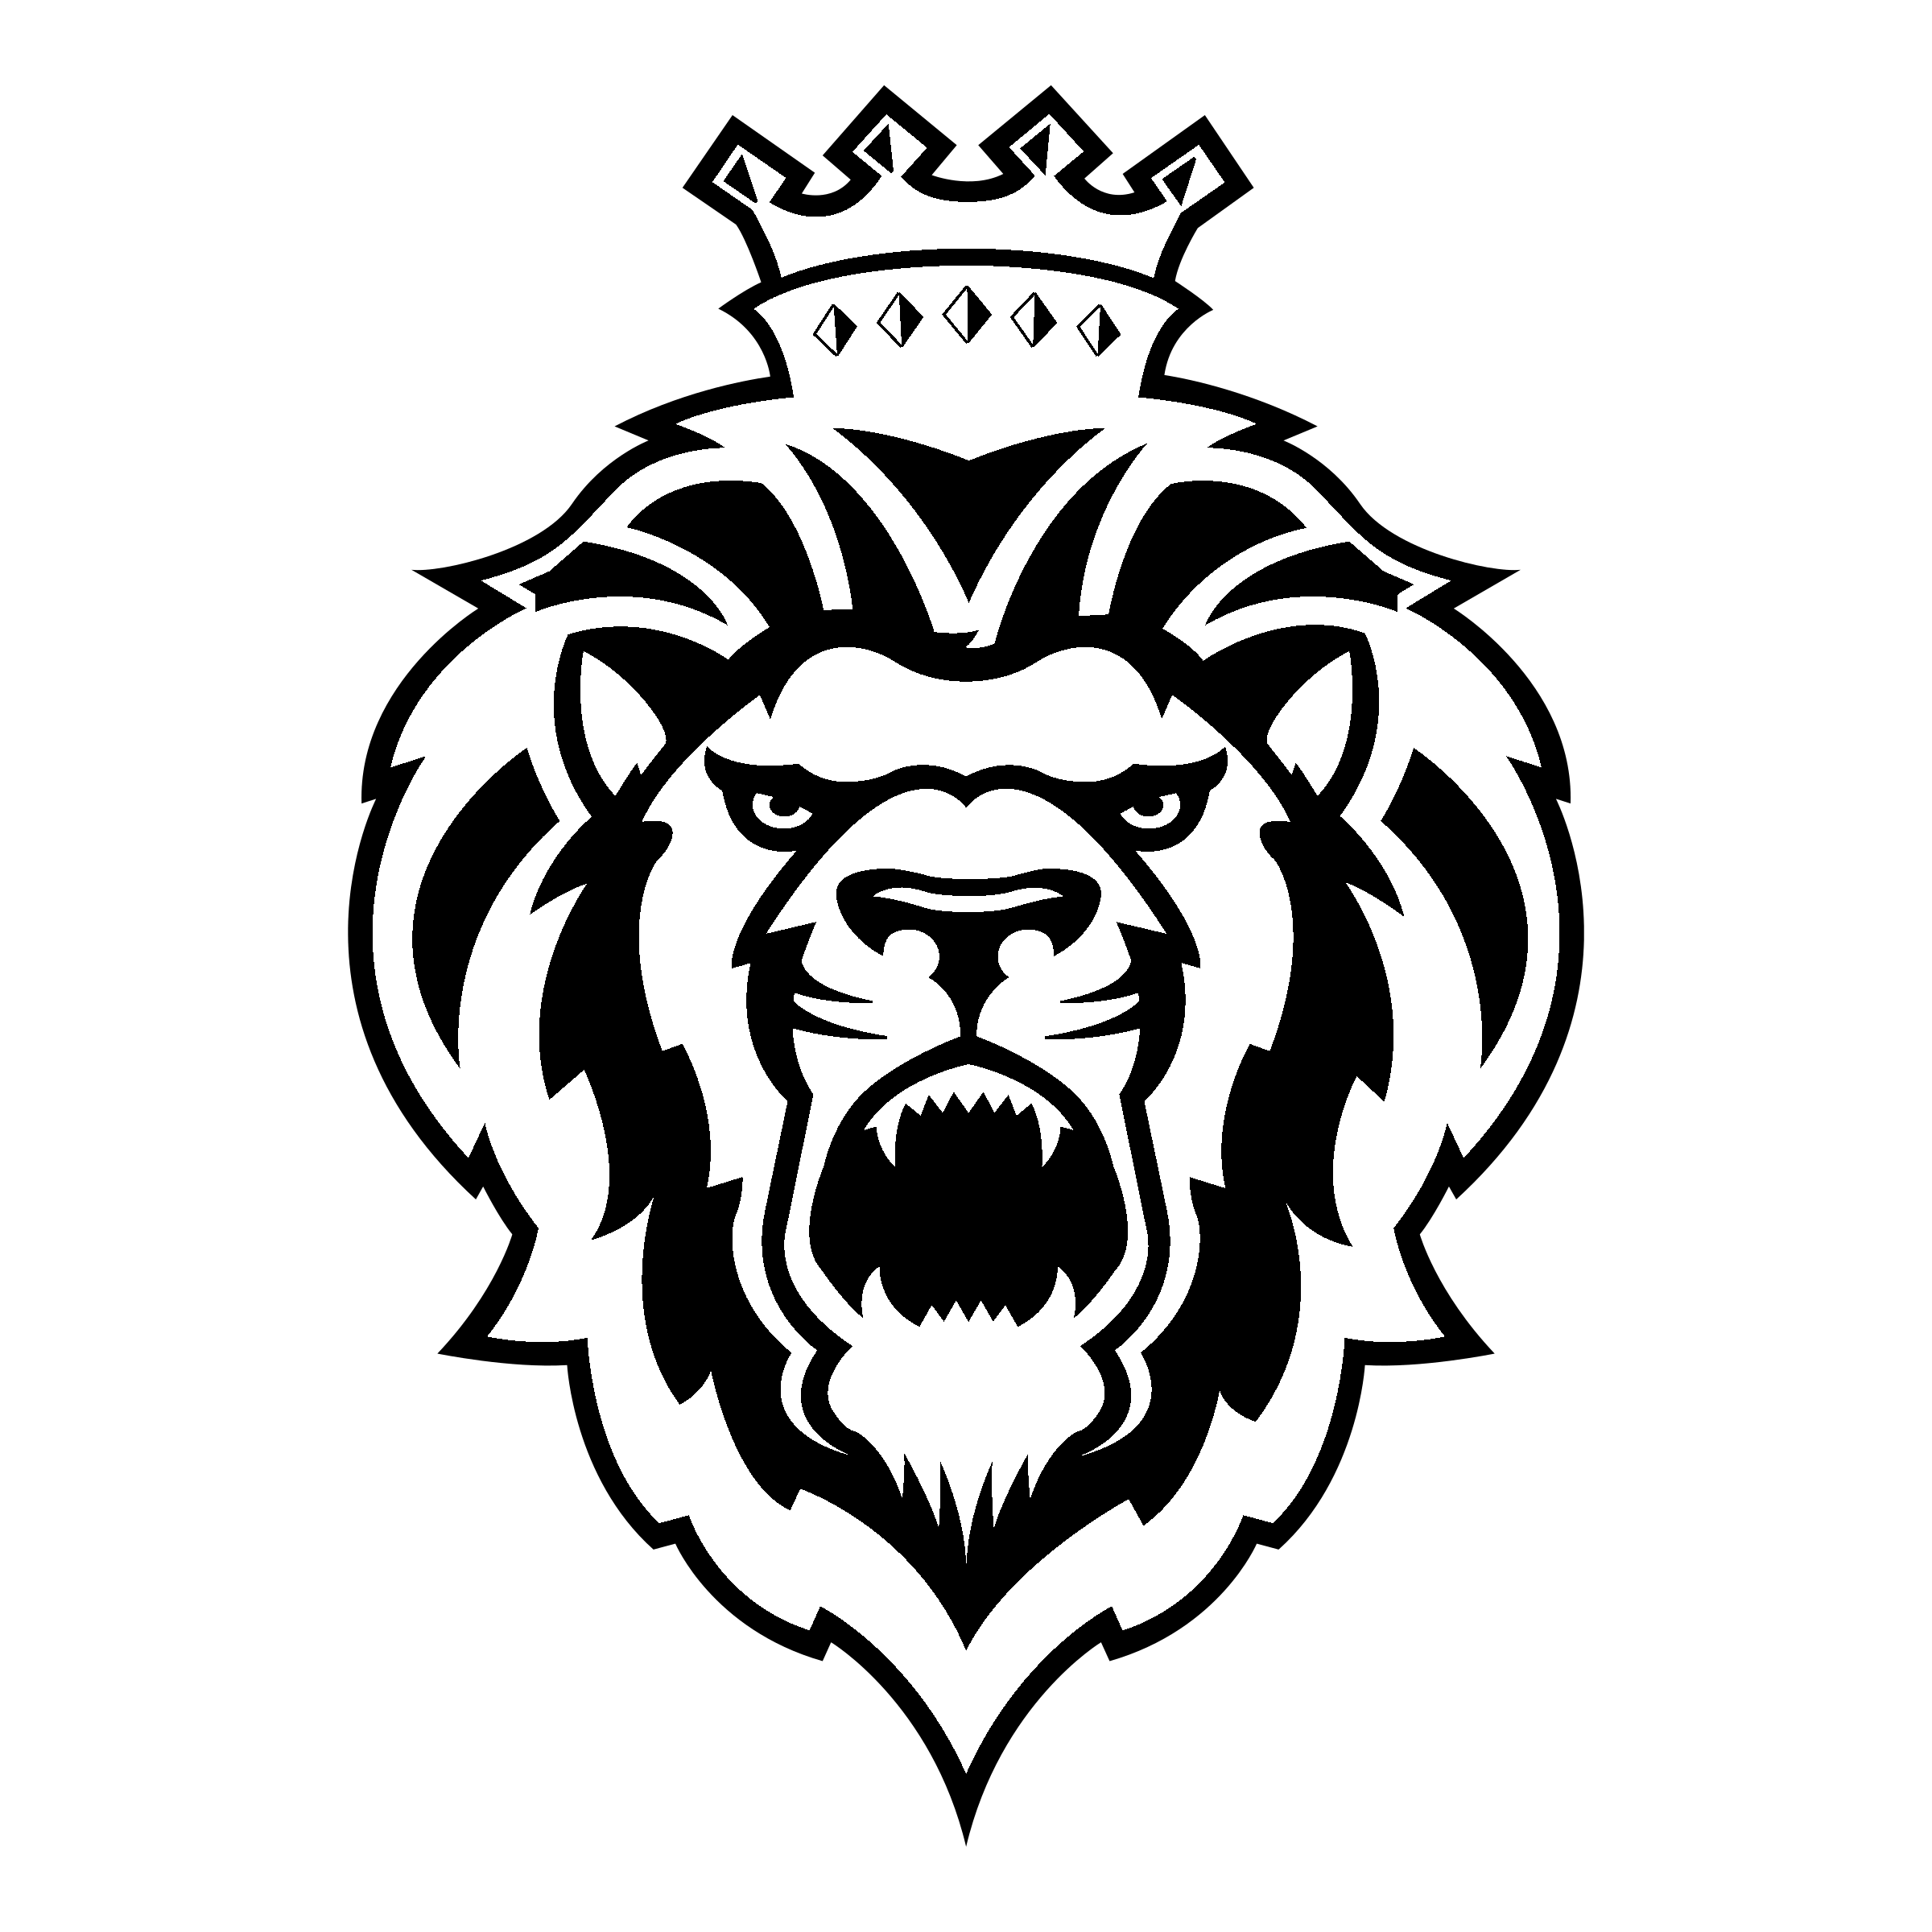 Transparent Royals Logo - Reading Royals Logo PNG Transparent & SVG Vector - Freebie Supply